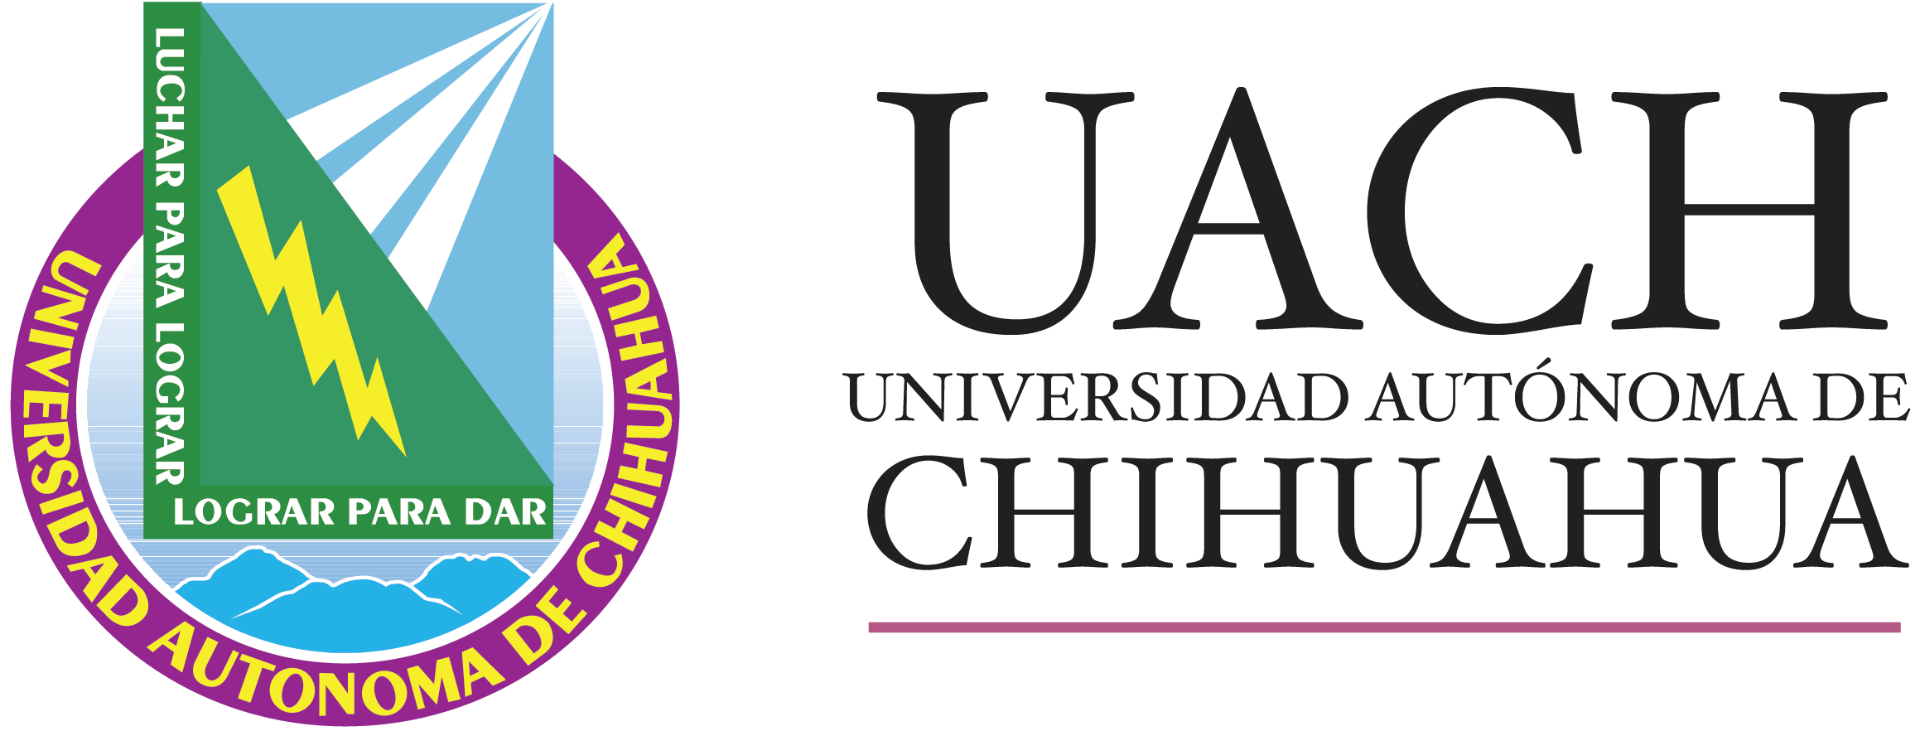 Logo_UACH_1